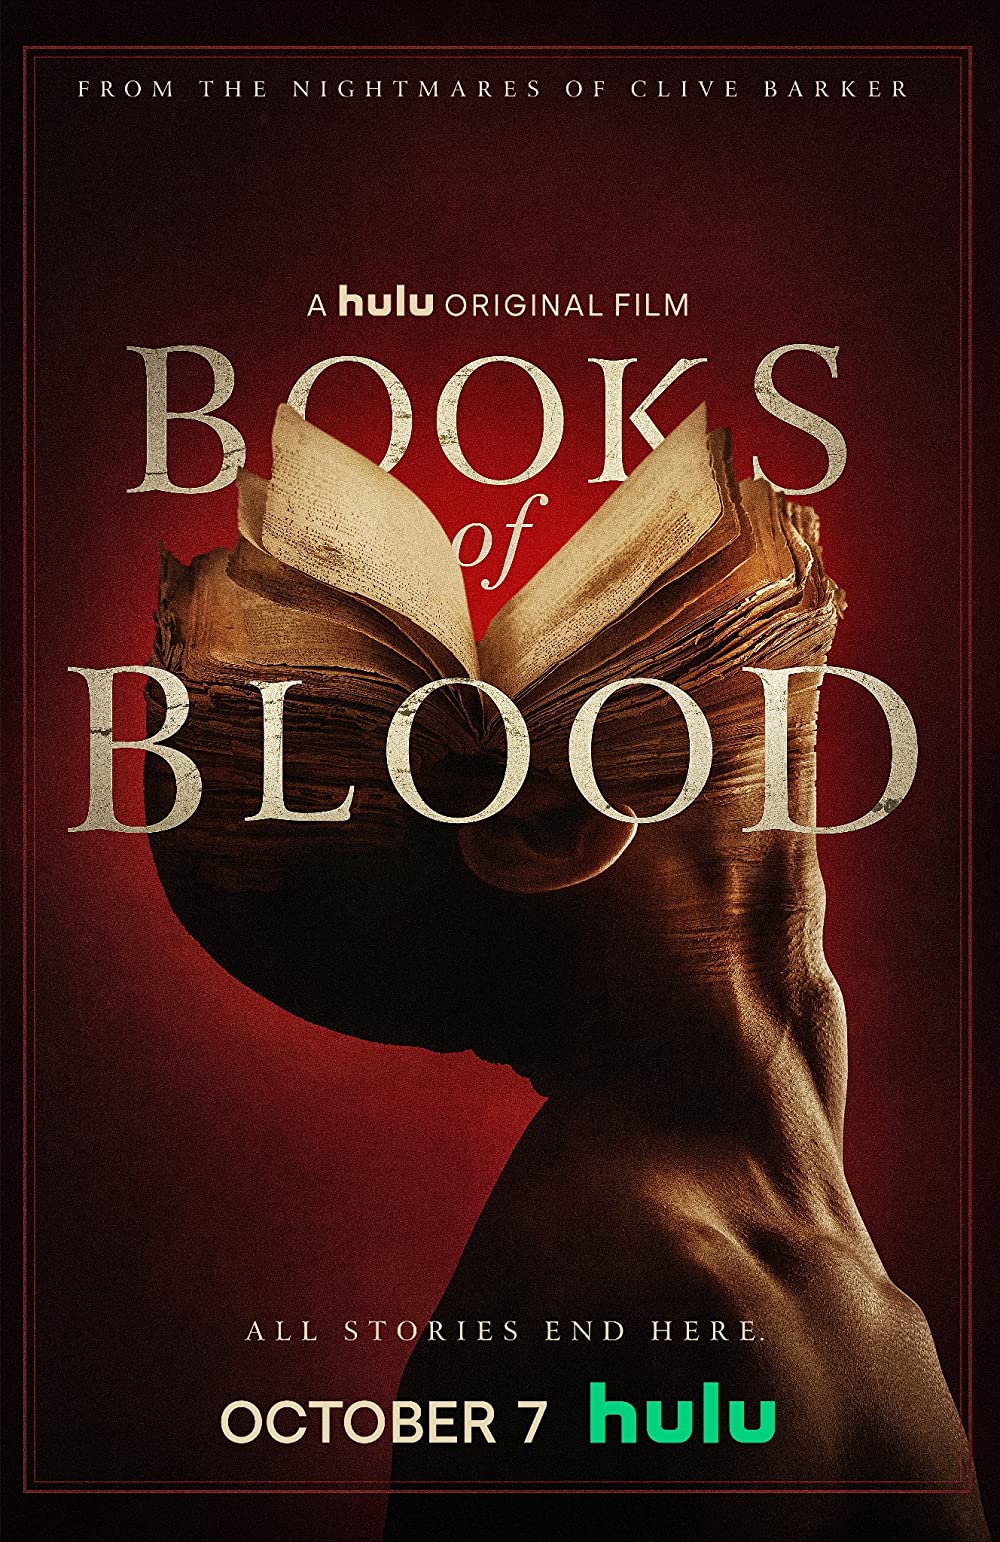 Filmbeschreibung zu Books of Blood